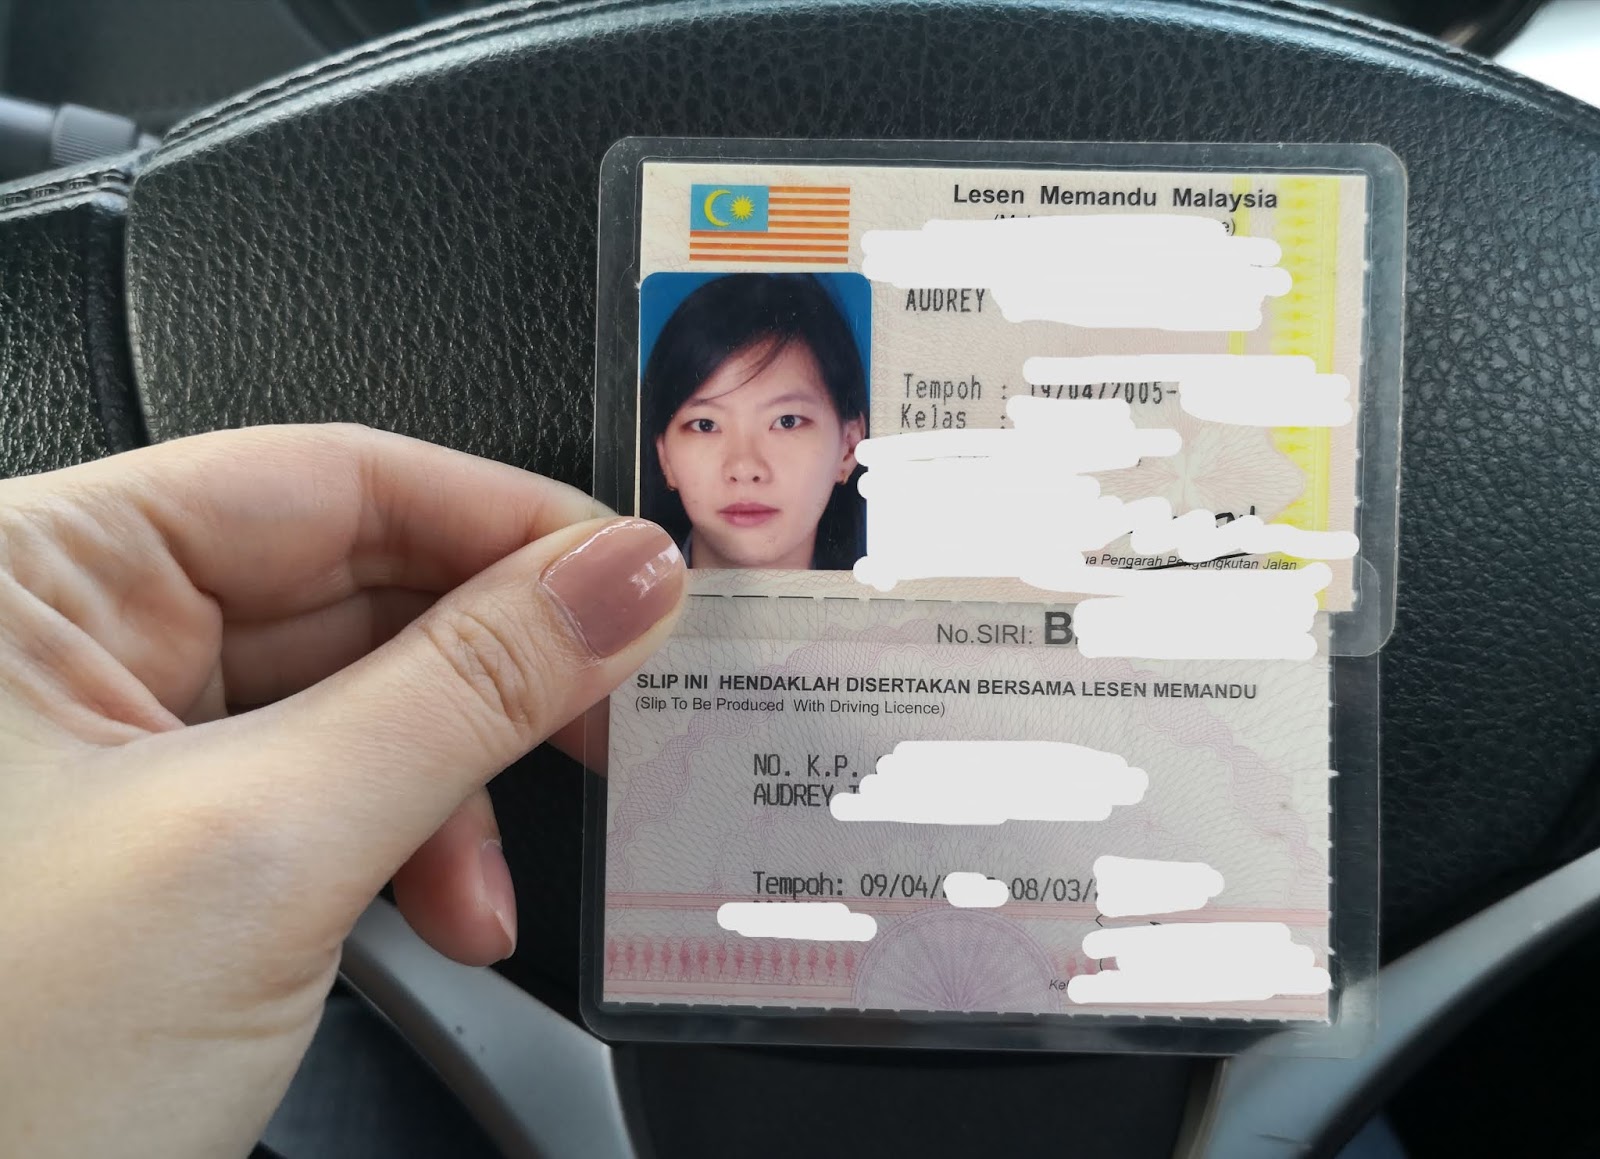 Renew Driving License under 10 minutes at JPJ Kuala Lumpur